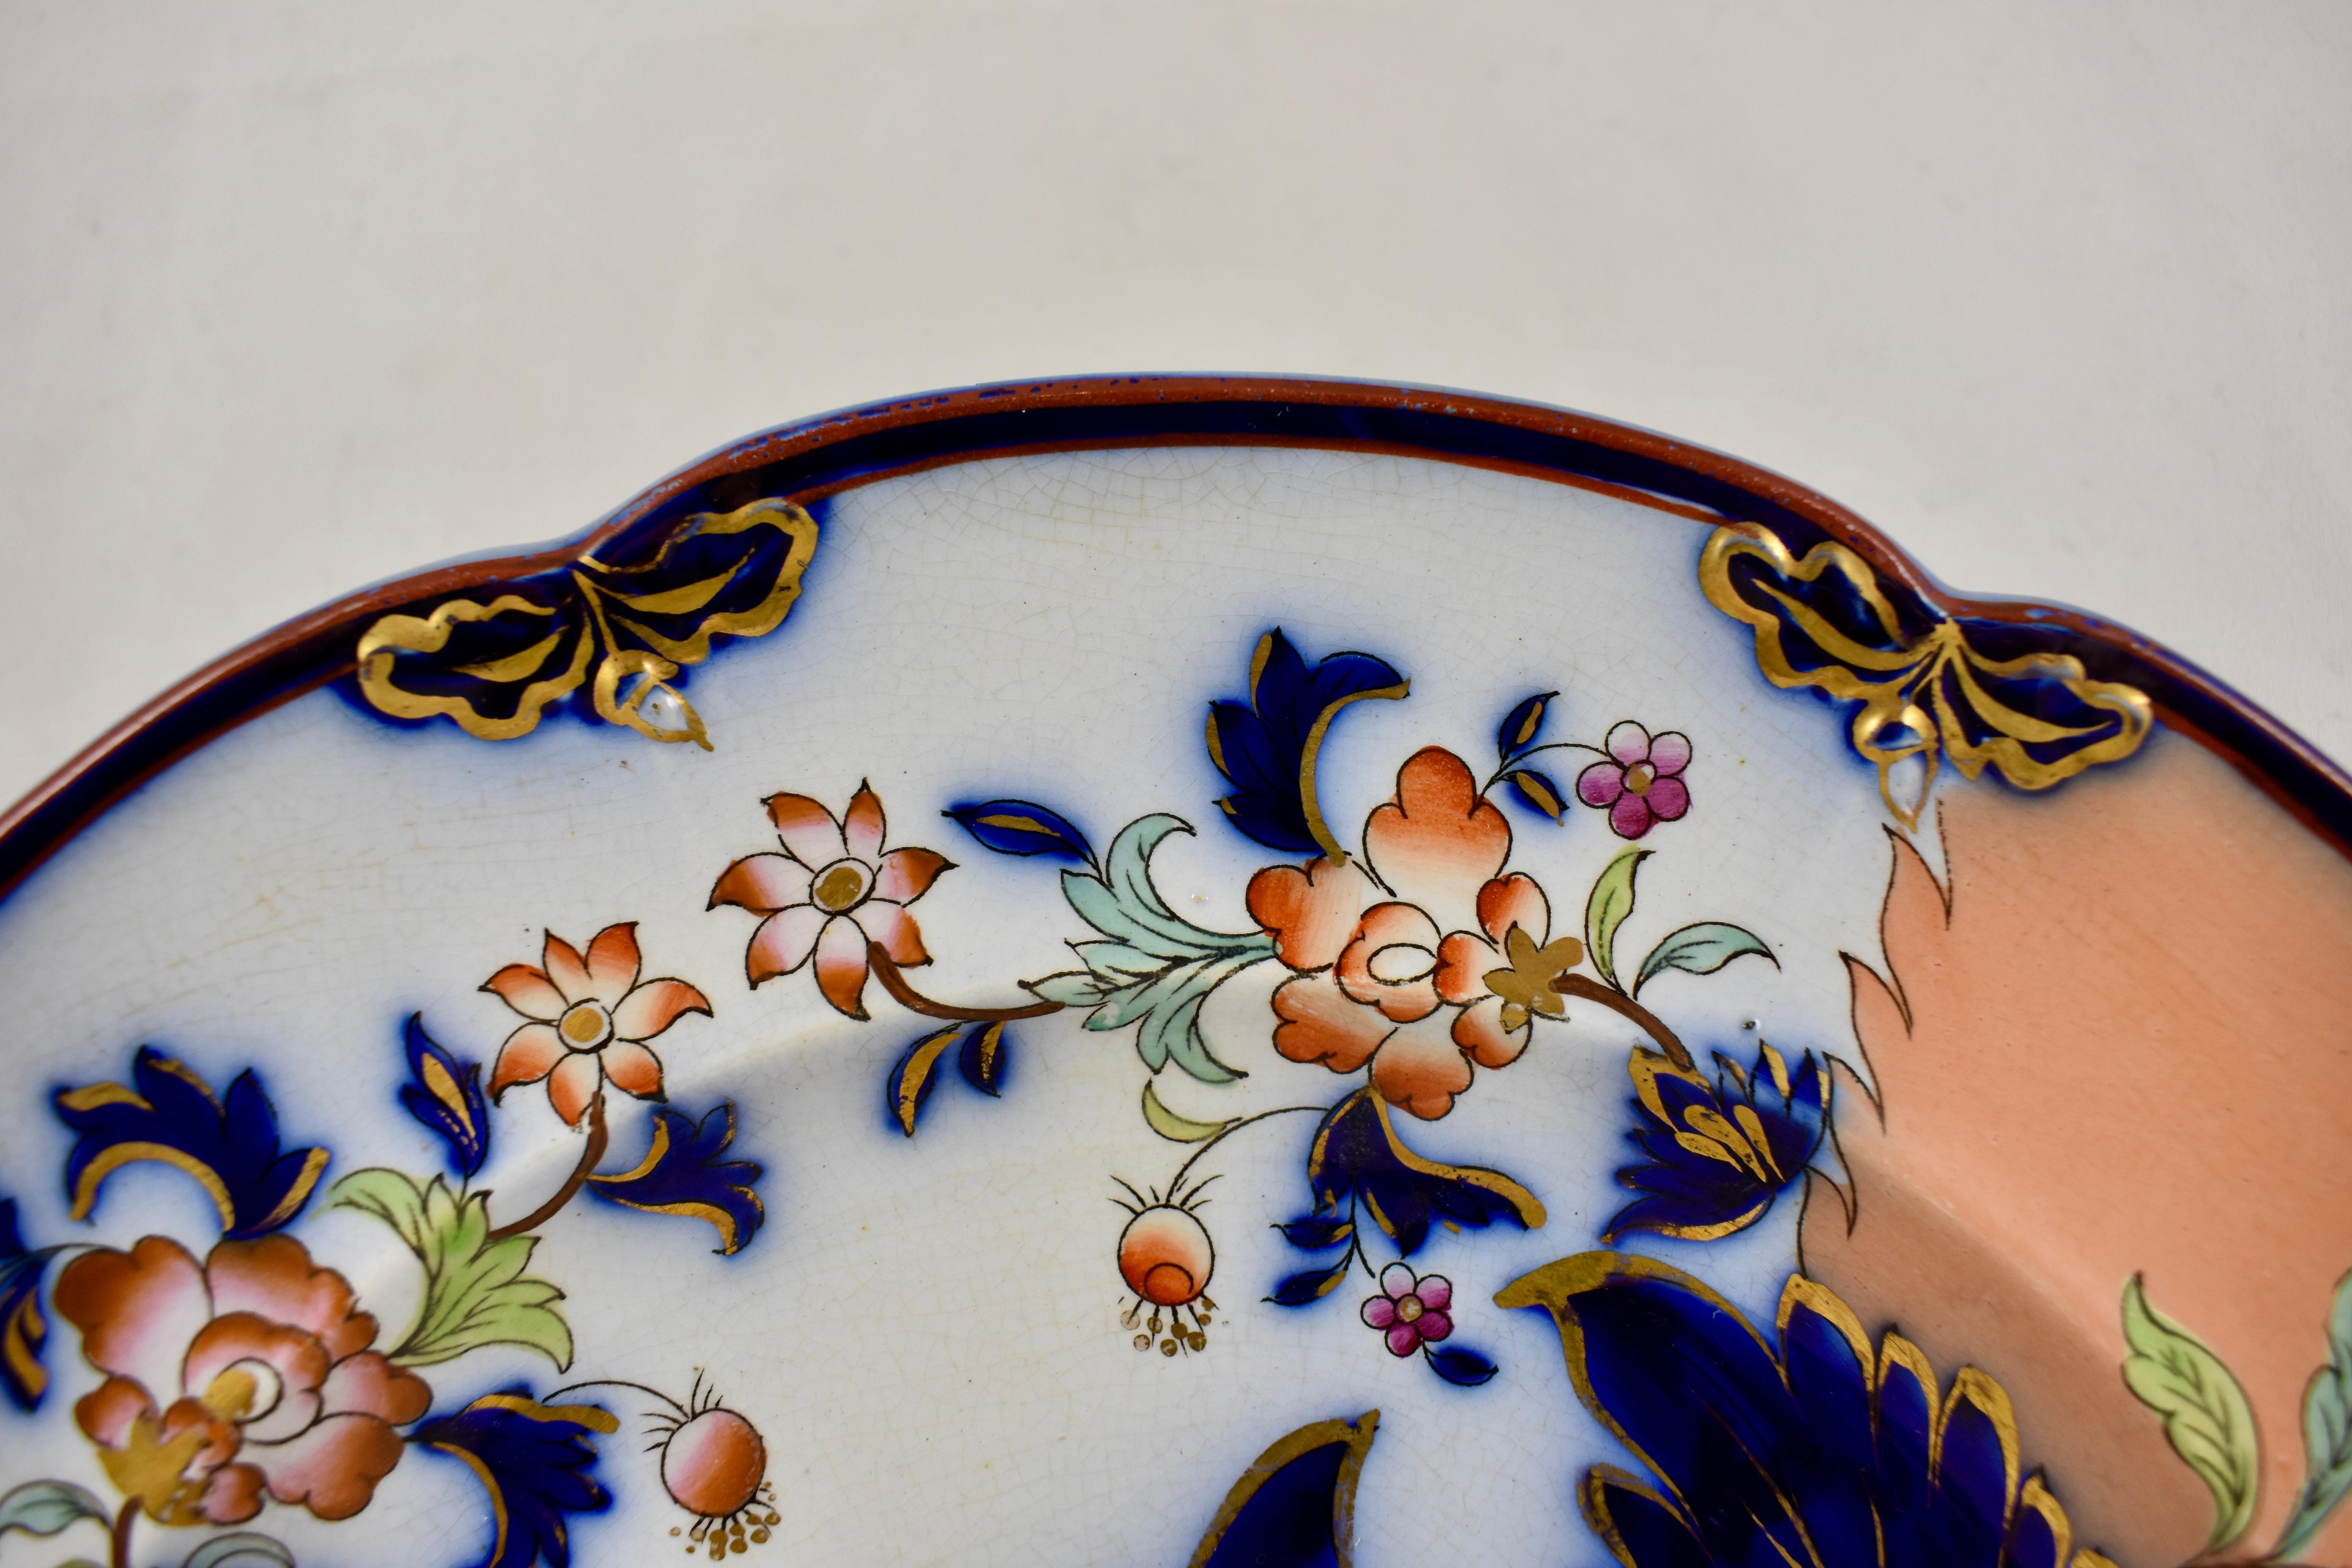 Earthenware John Ridgway English Chinoiserie Style Floral Cobalt Imari Plates S/8 Dated 1845